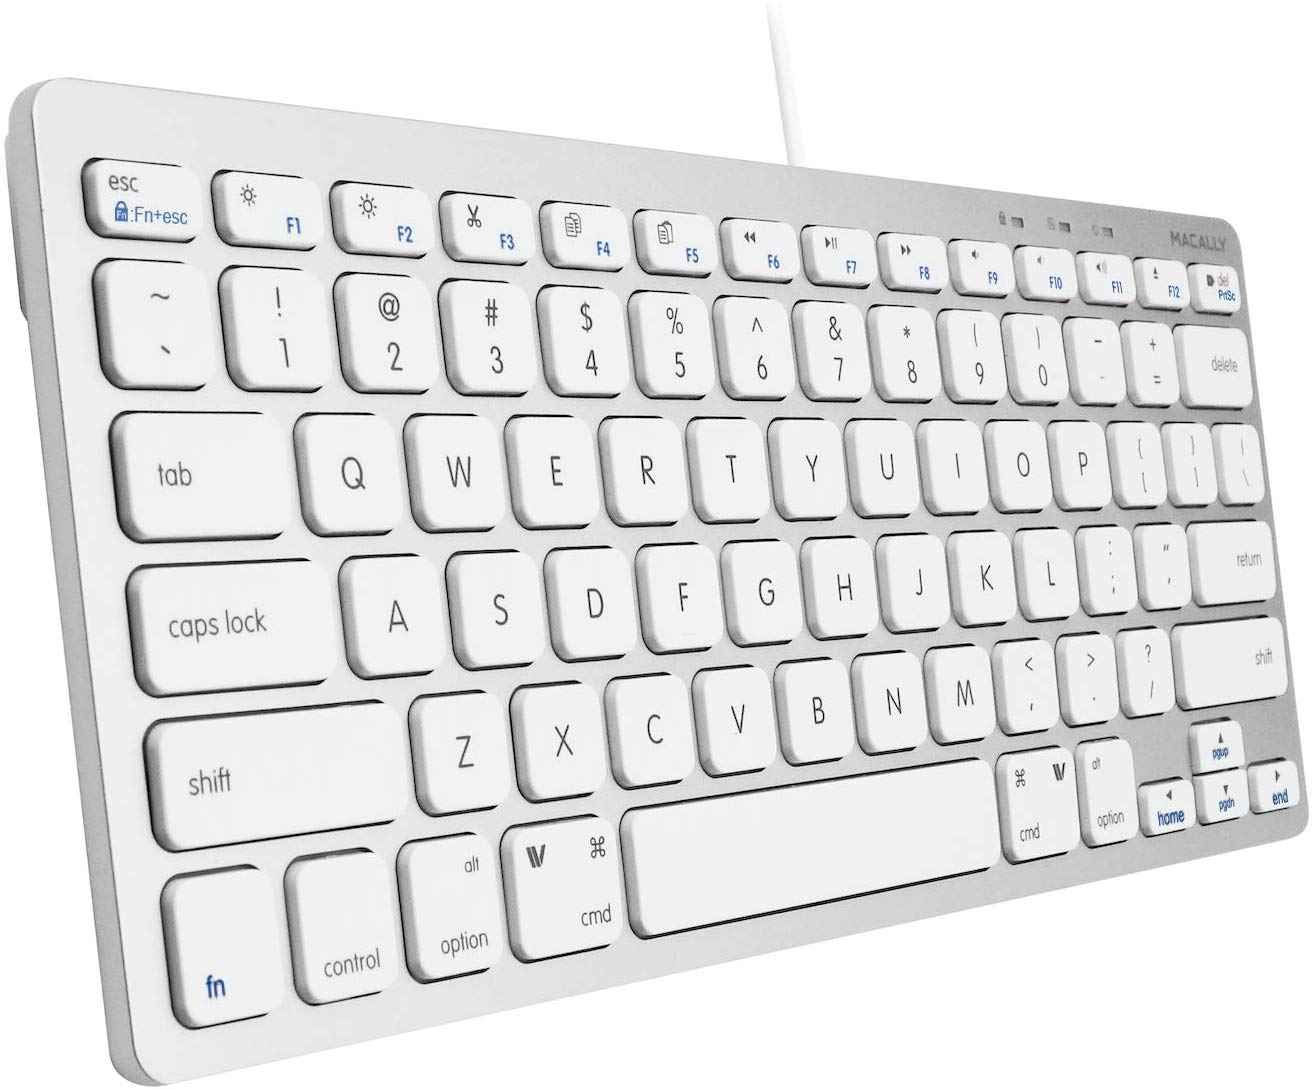 usb keyboard for nintendo switch